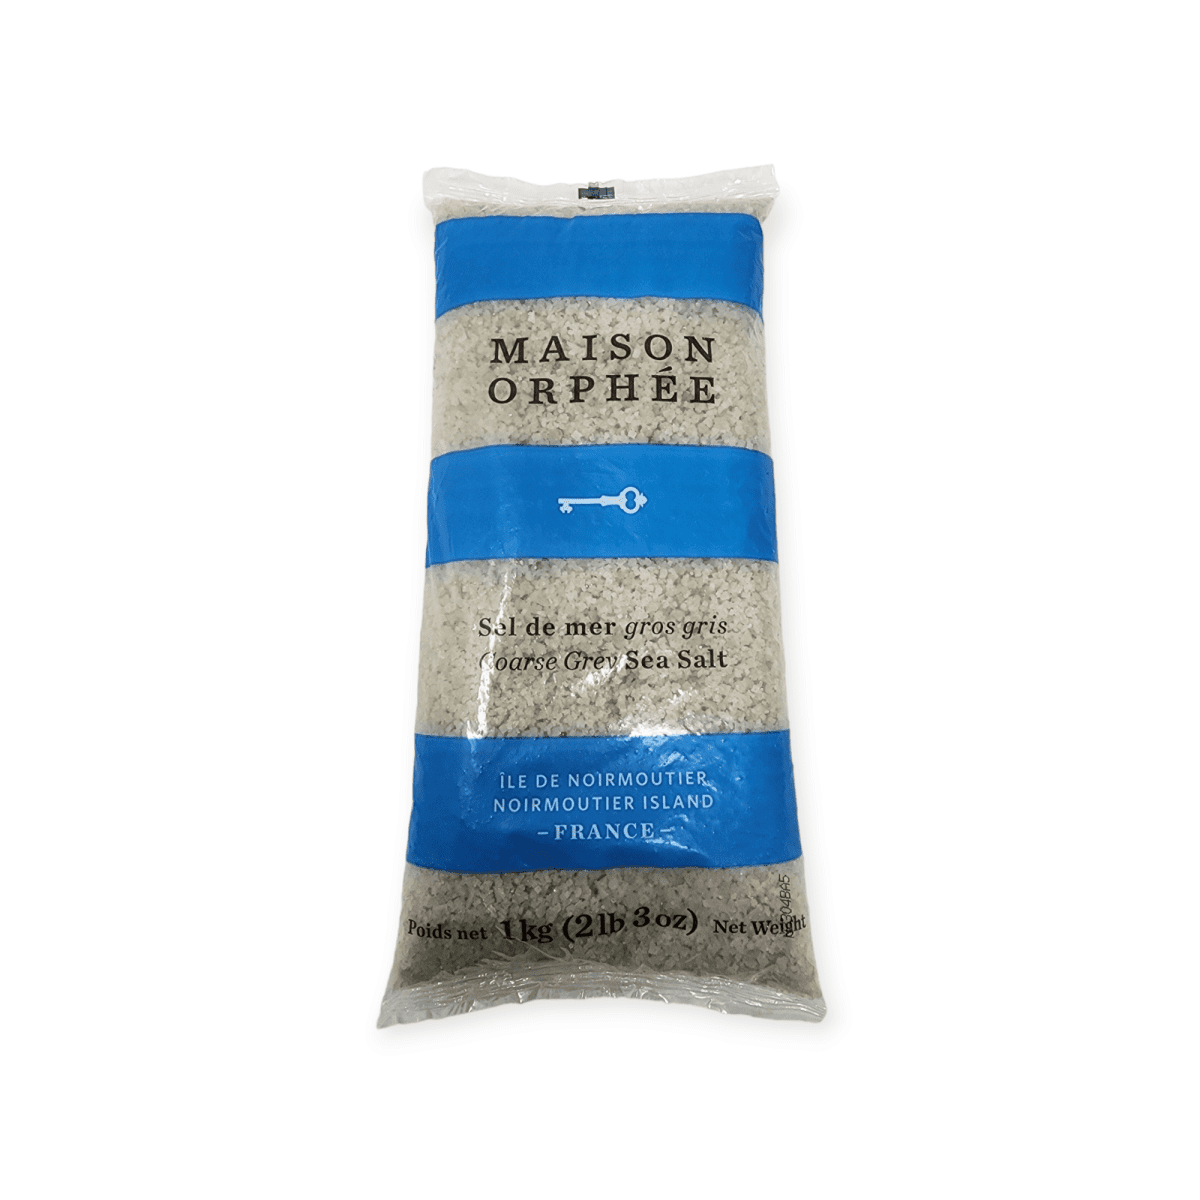 Maison Orphee Coarse Grey Sea Salt (1kg)